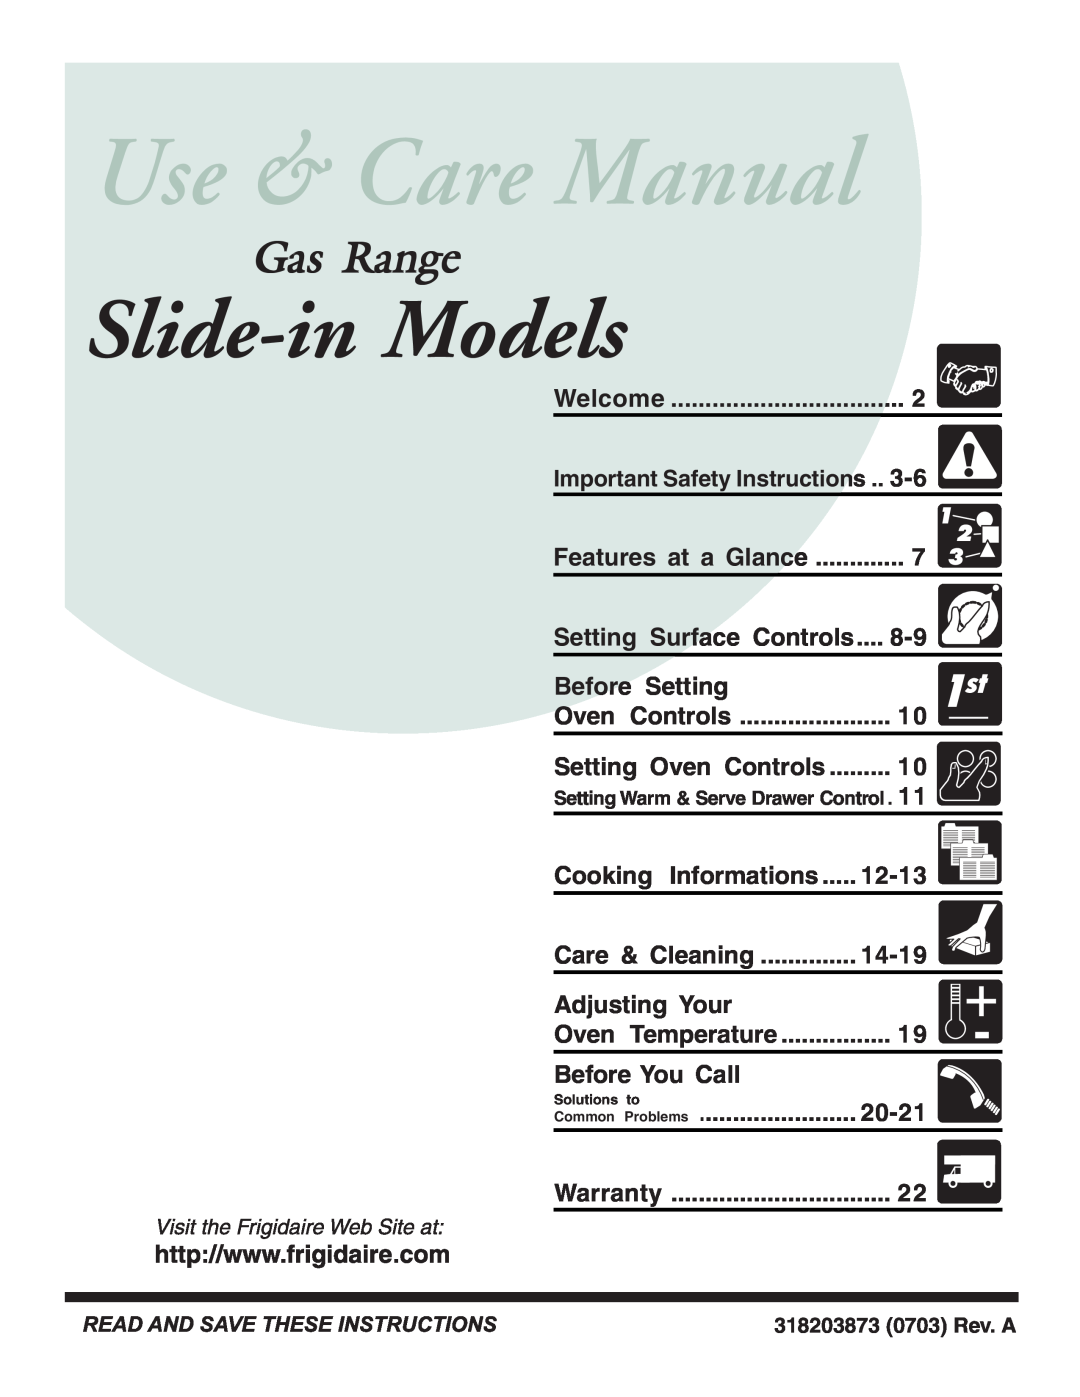 Frigidaire 318203873 manual Slide-in Models, Gas Range 